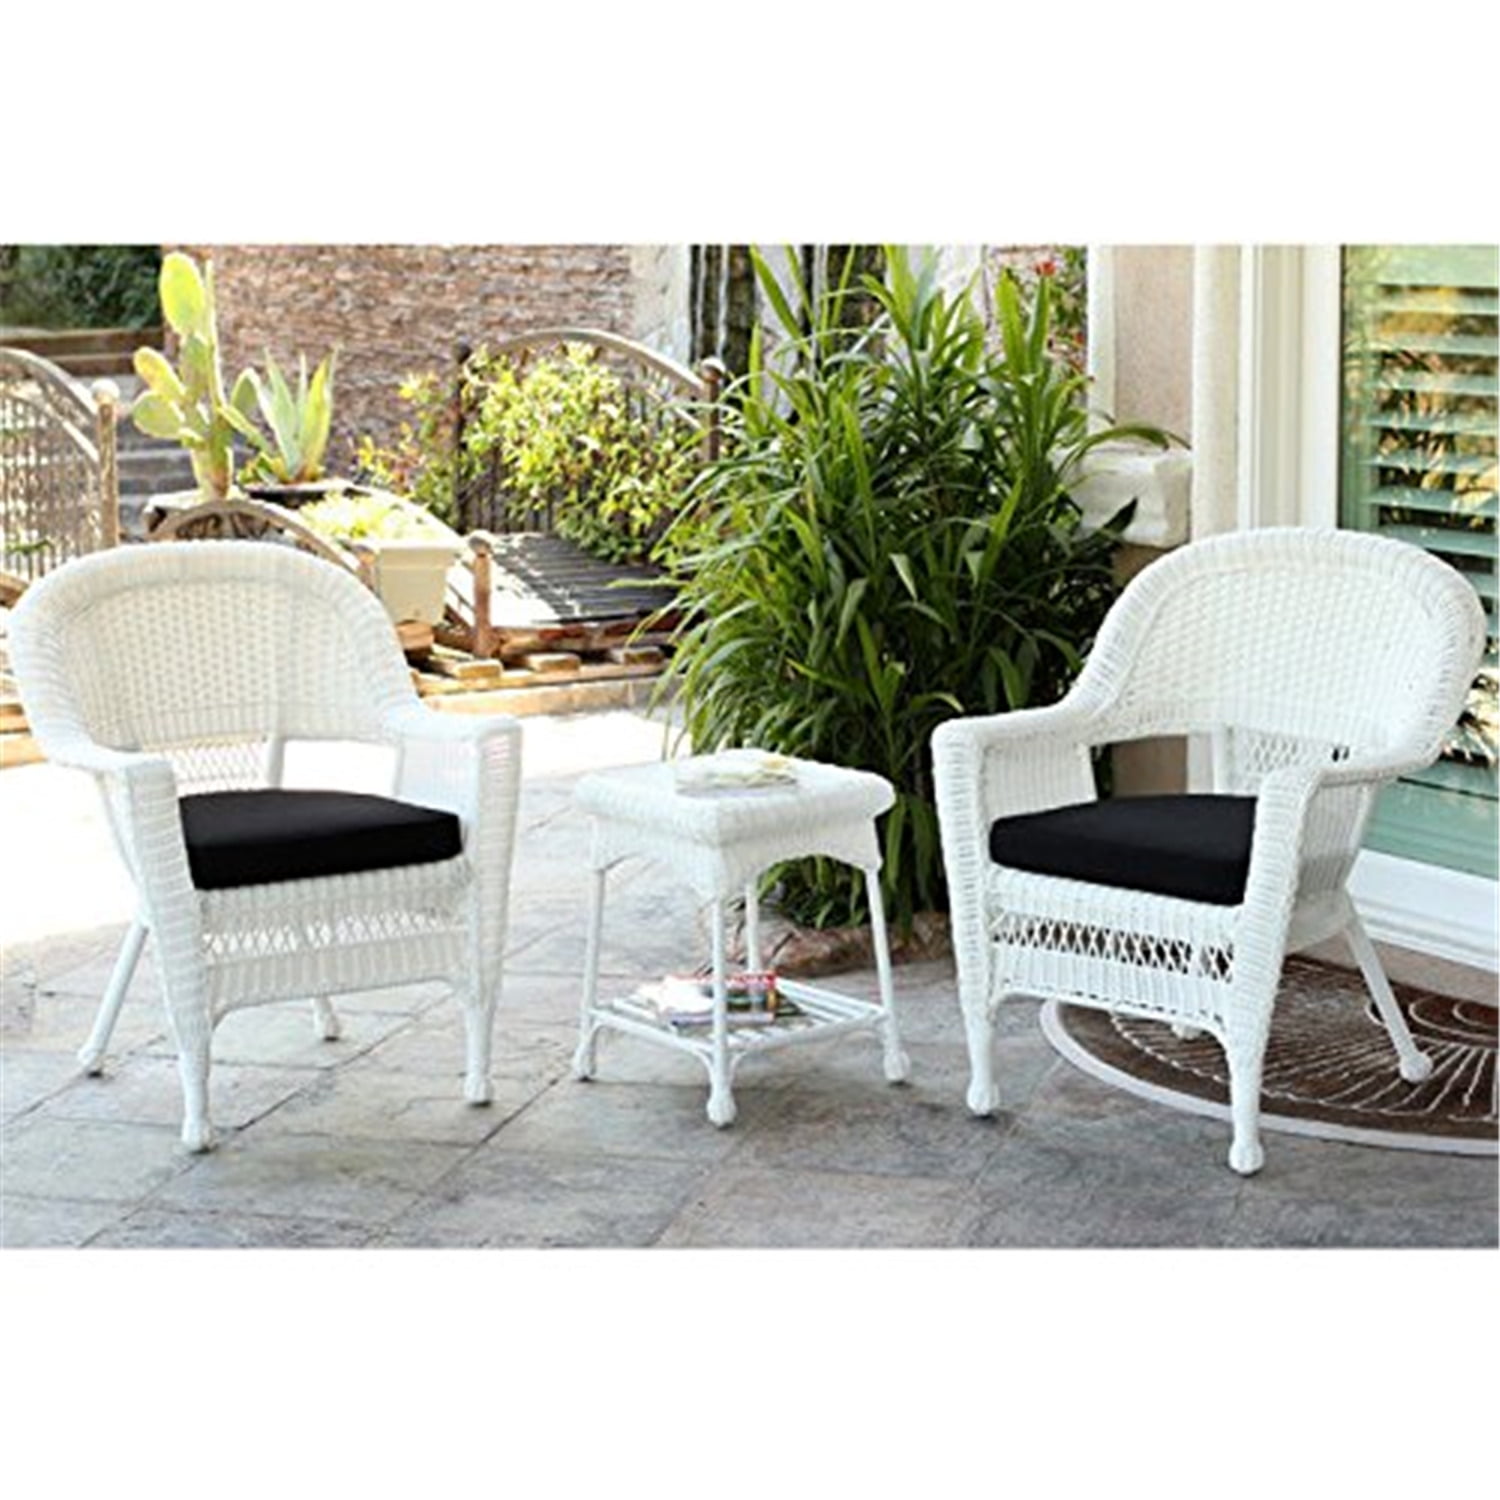 Table & White Cushion 3pcs Outdoor Garden Rattan Patio Furniture Set w/2 Chairs 